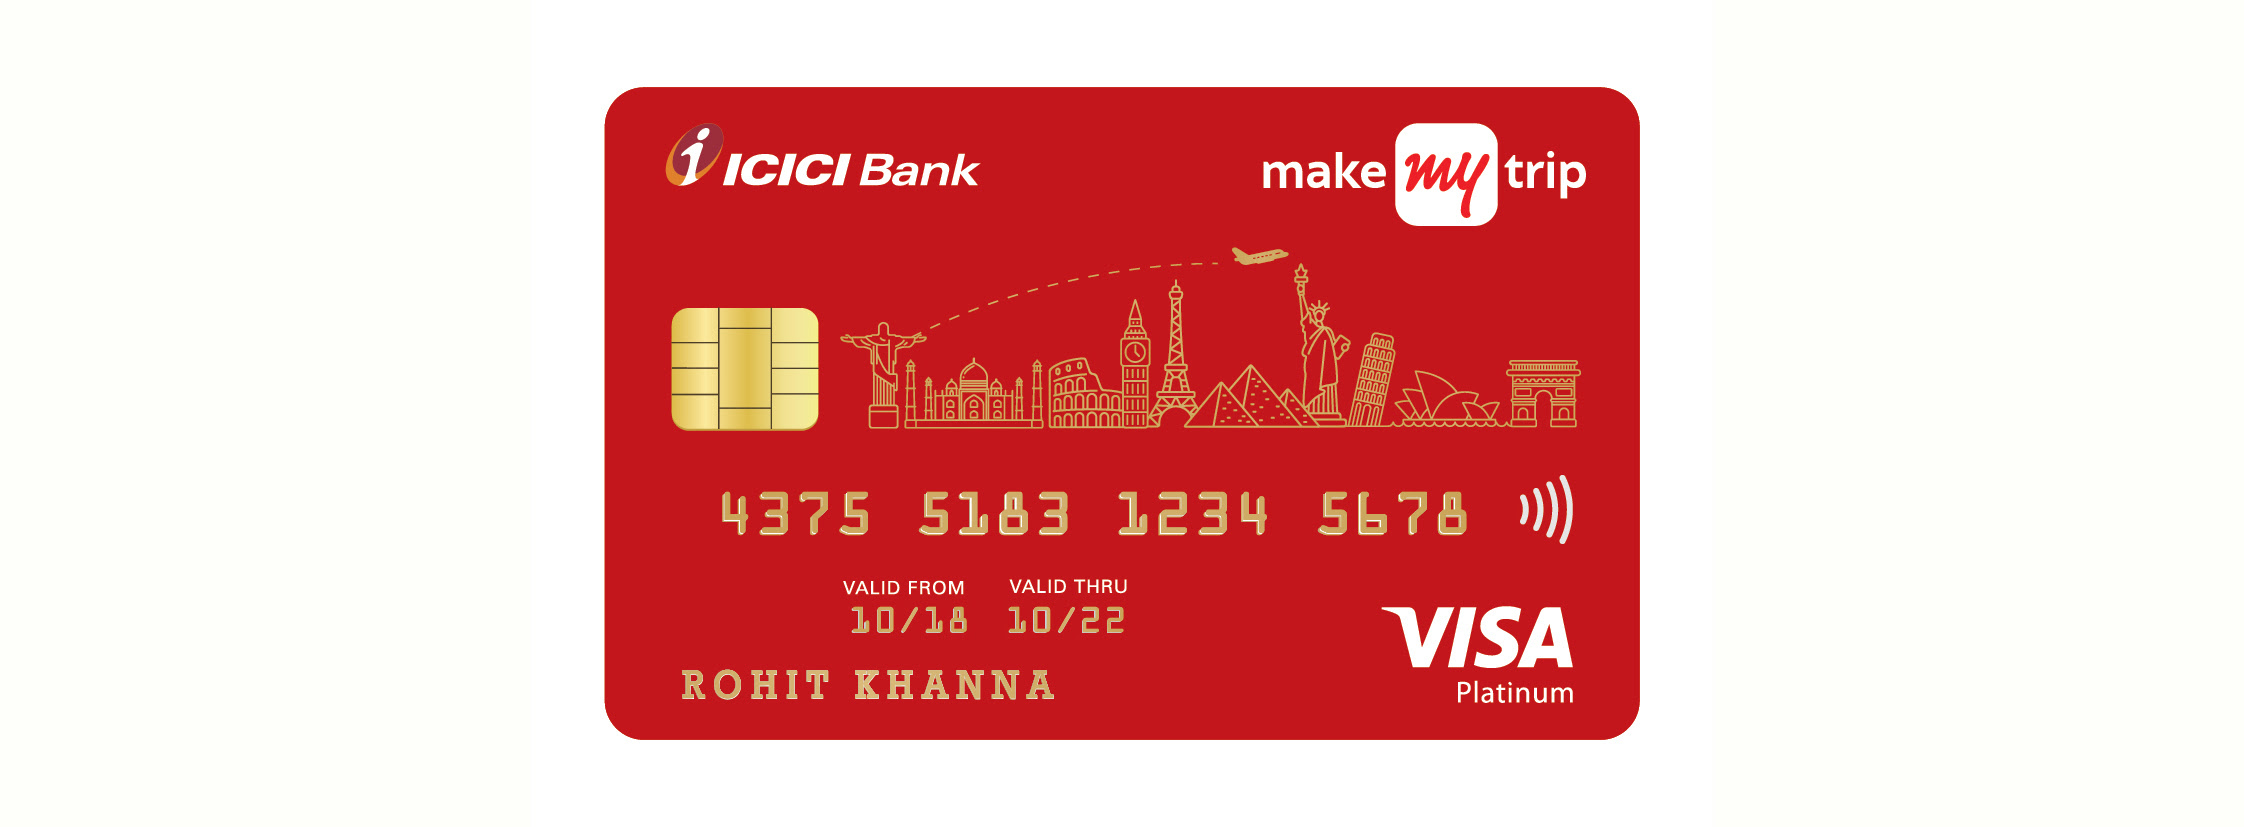 Icici credit card travel offers. Icici Bank Ties Up With Makemytripicici Bank Ties Up With Makemytrip Tnhglobal